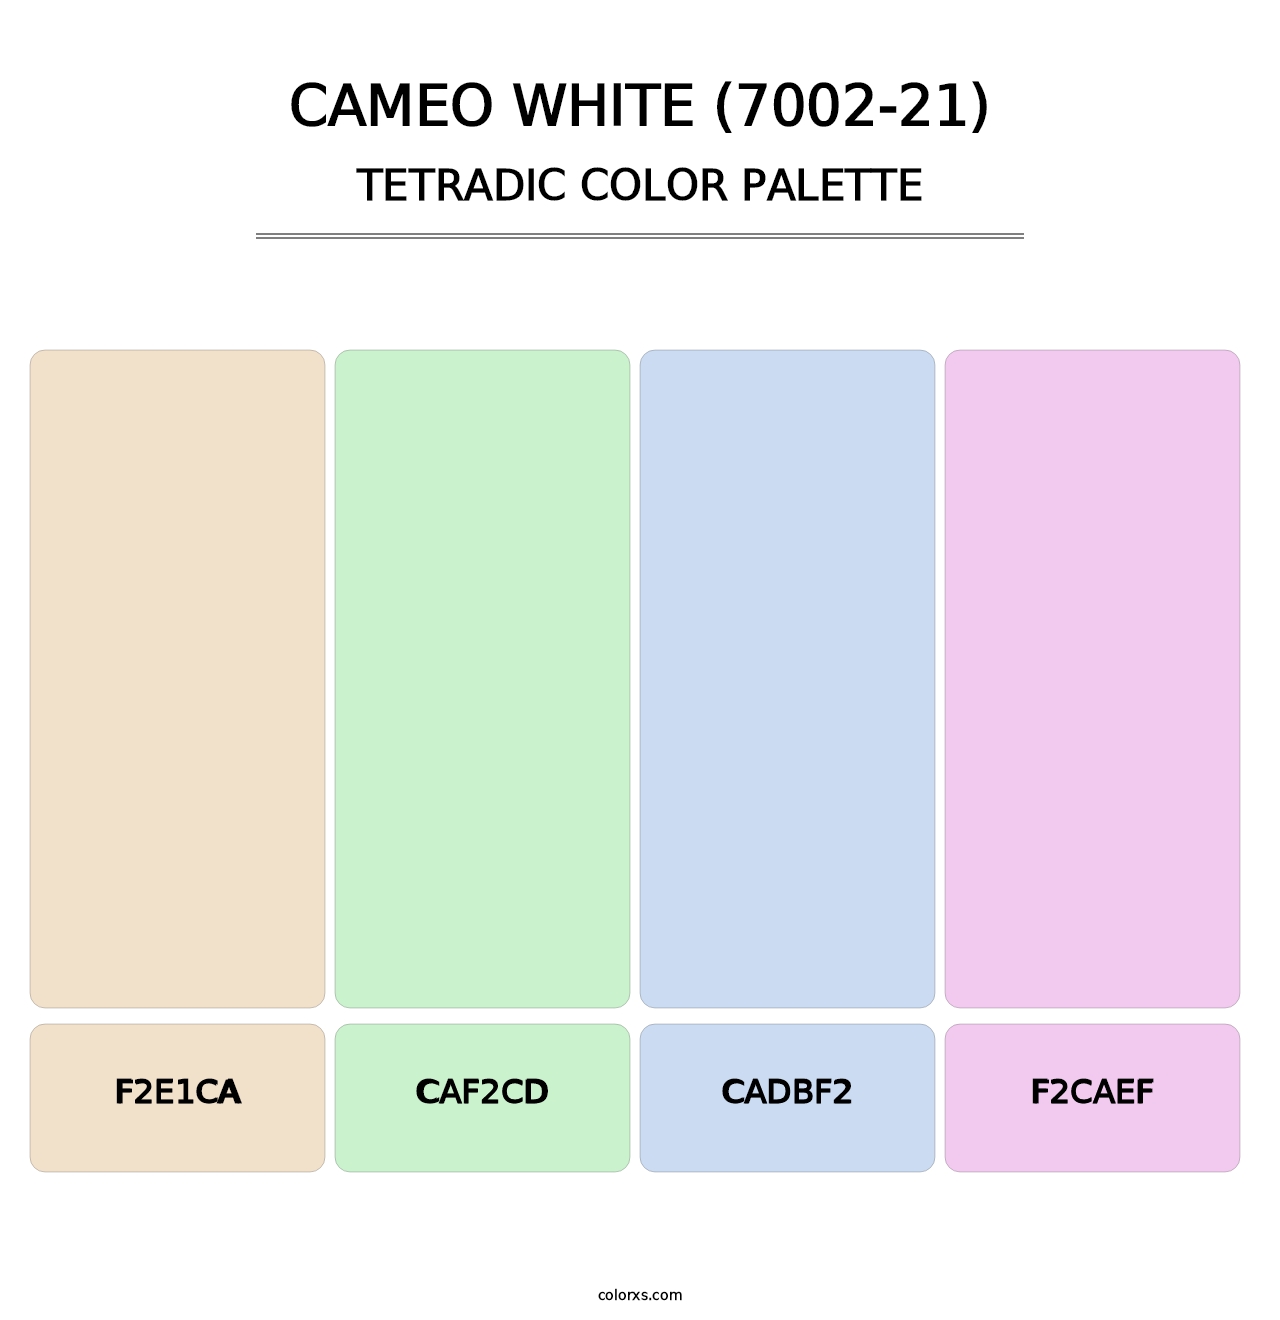 Cameo White (7002-21) - Tetradic Color Palette